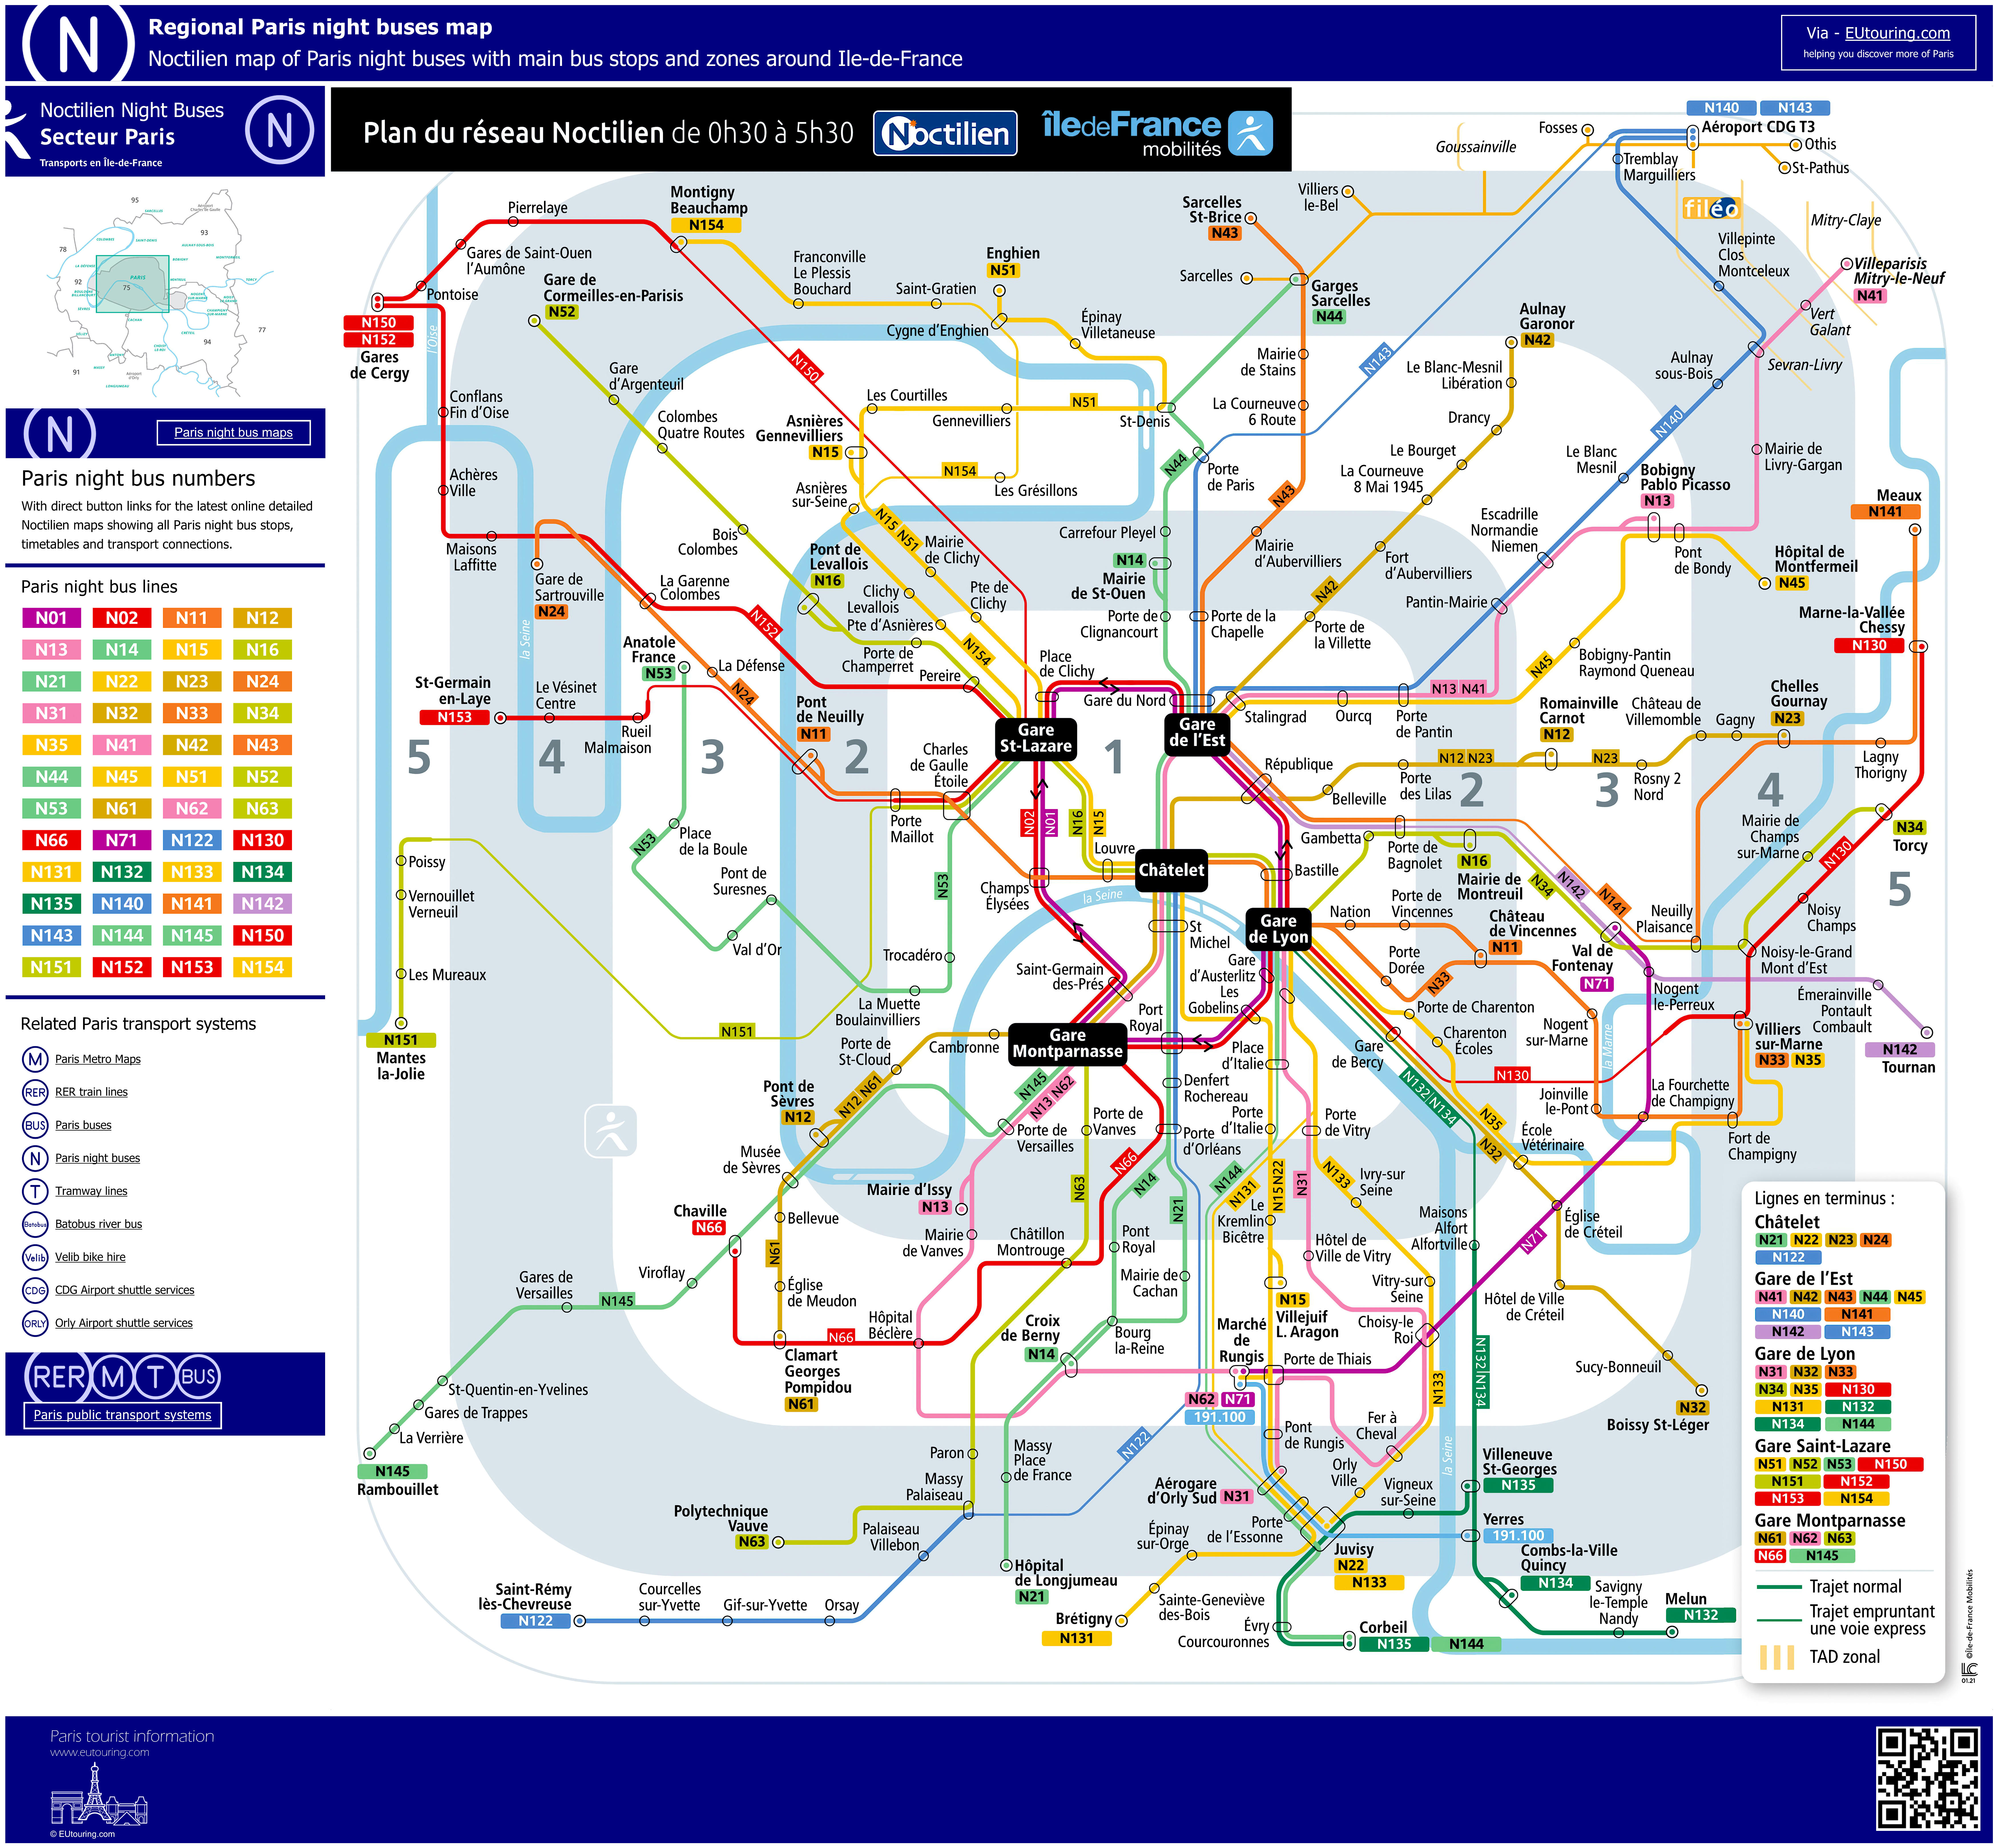 Noctilien Bus Maps And Timetables For Paris Night Buses. 